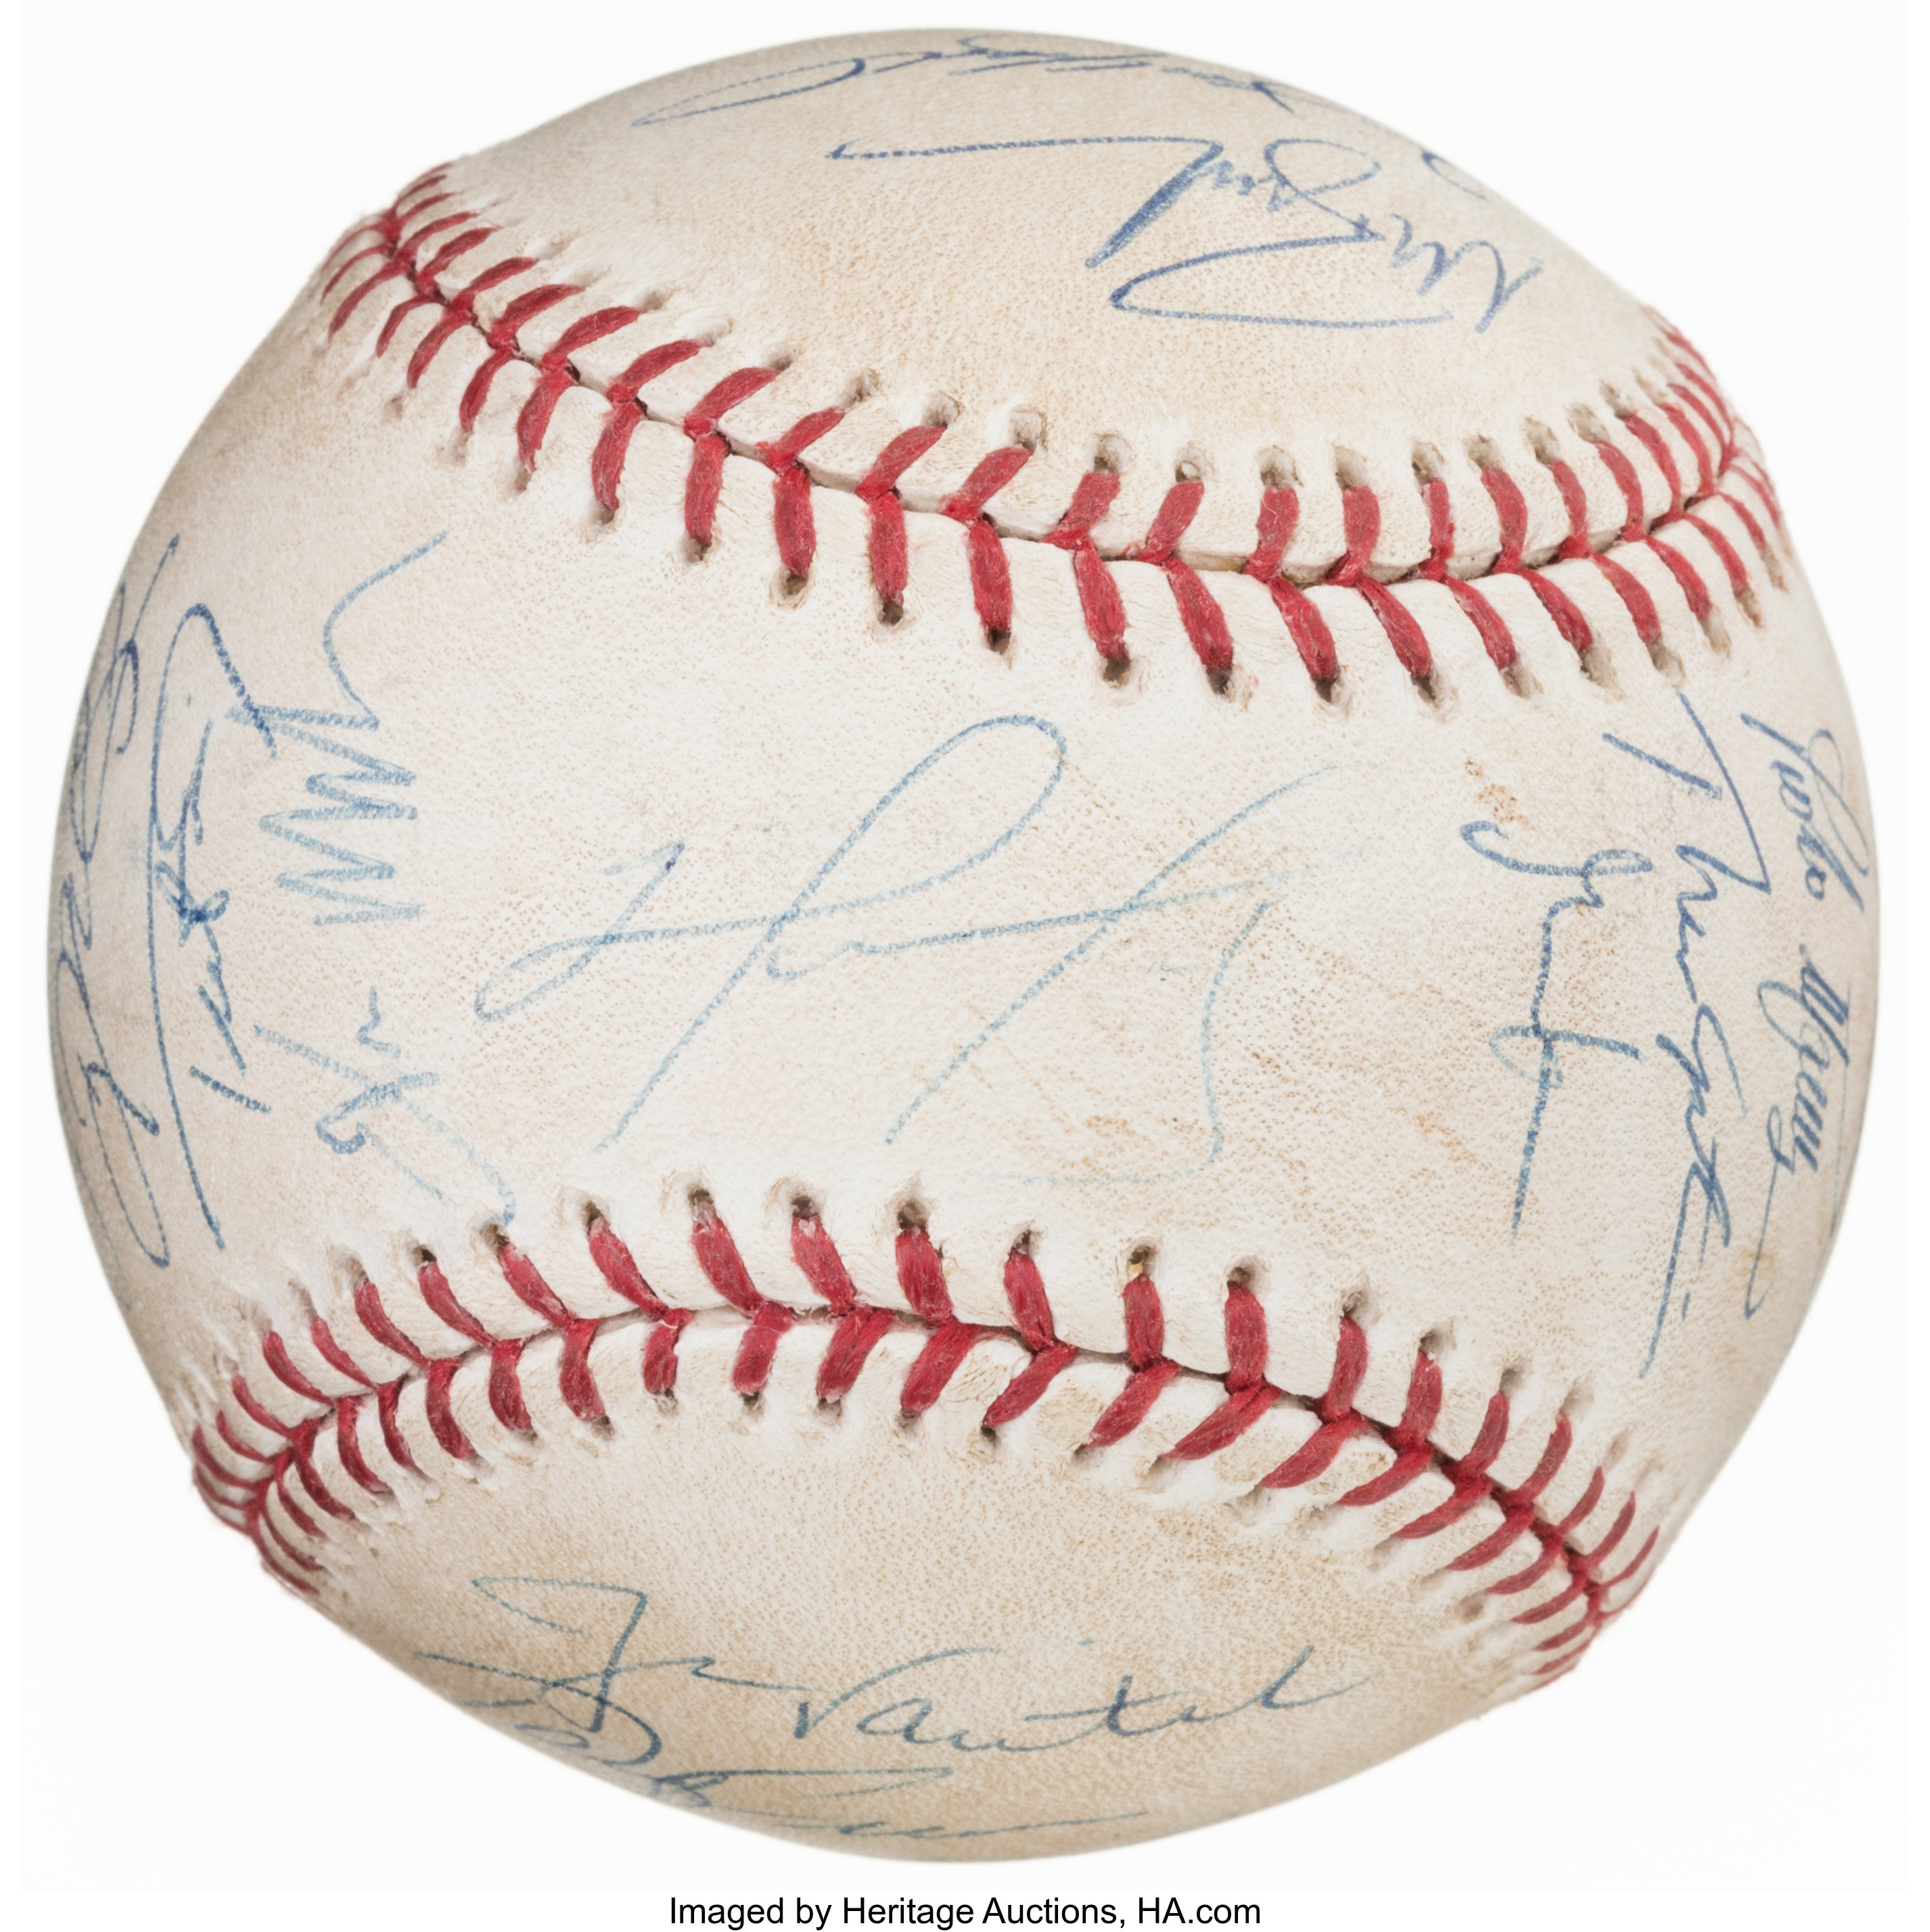 Lot Detail - 2004 Manny Ramirez Boston Red Sox Game-Used